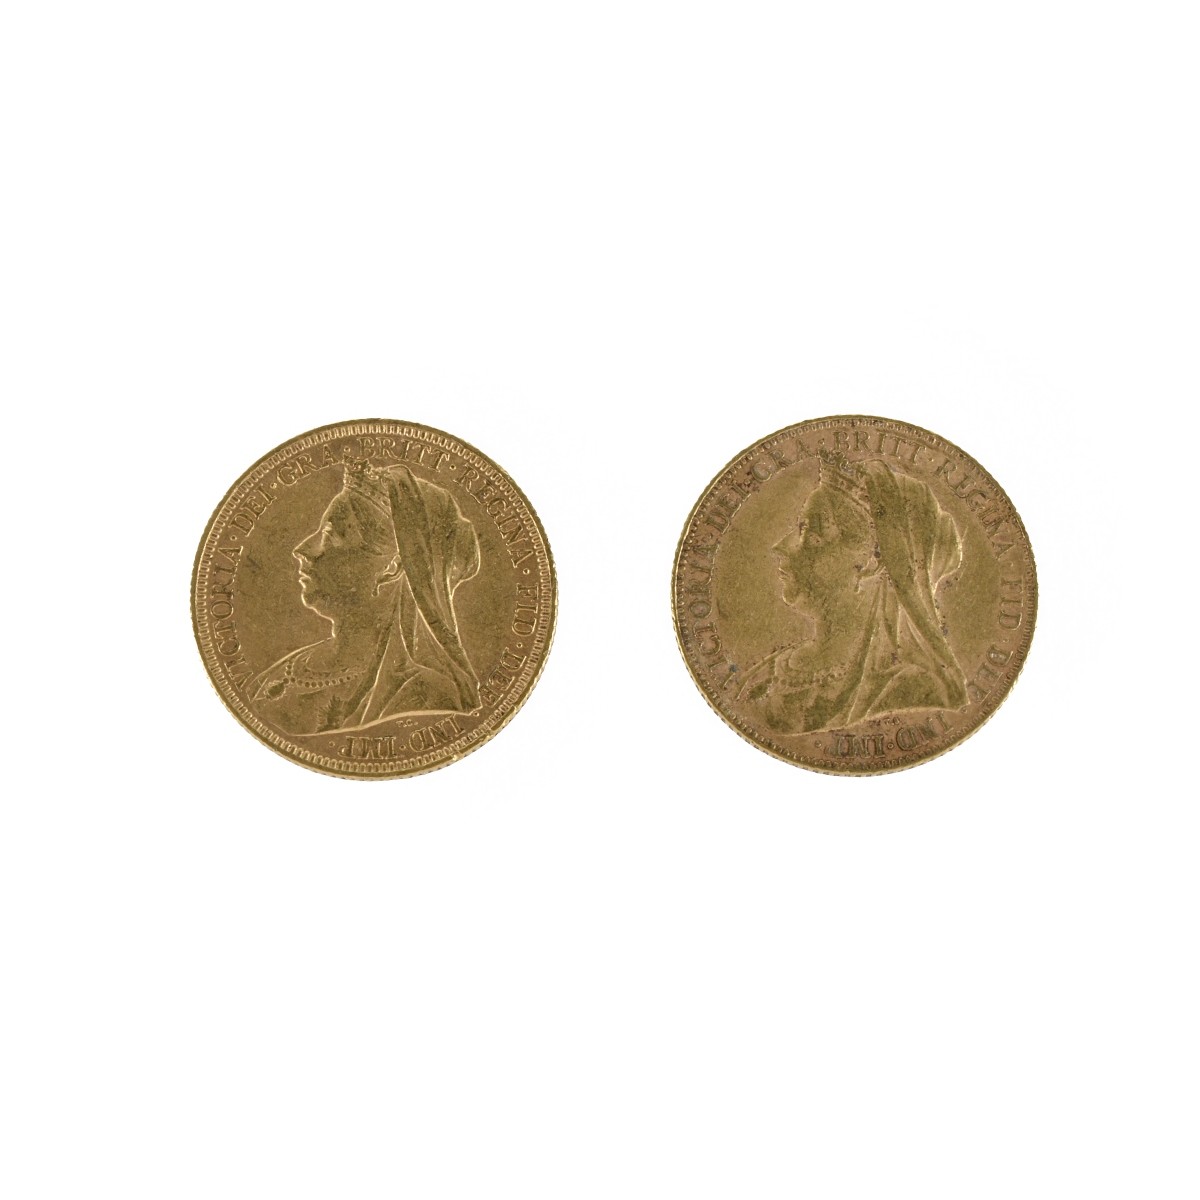 British Gold Sovereign Coins